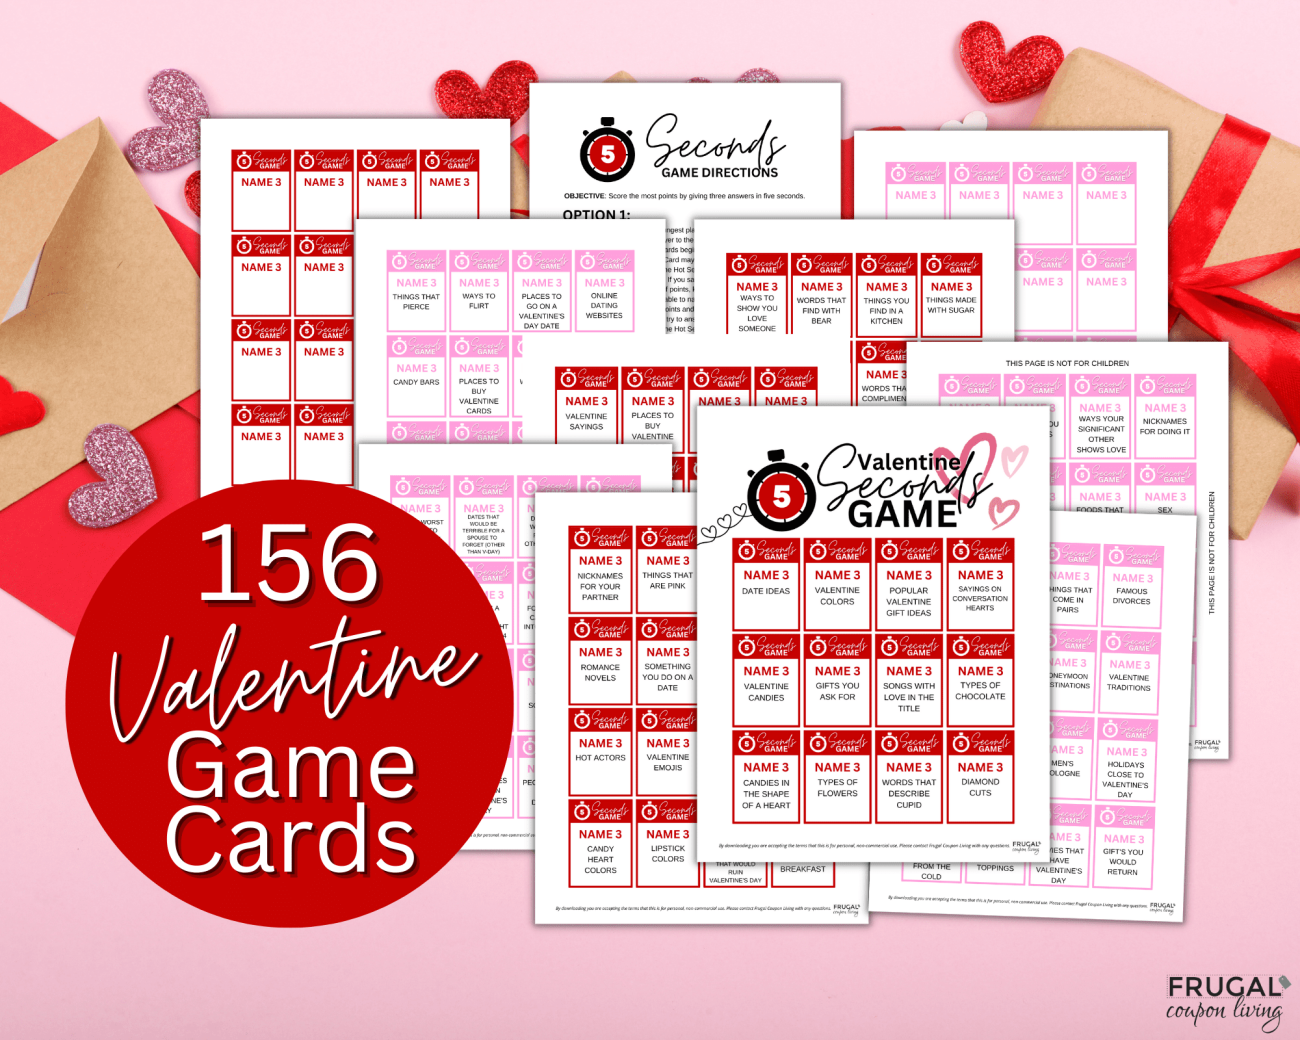 5 second name 3 valentine games printable